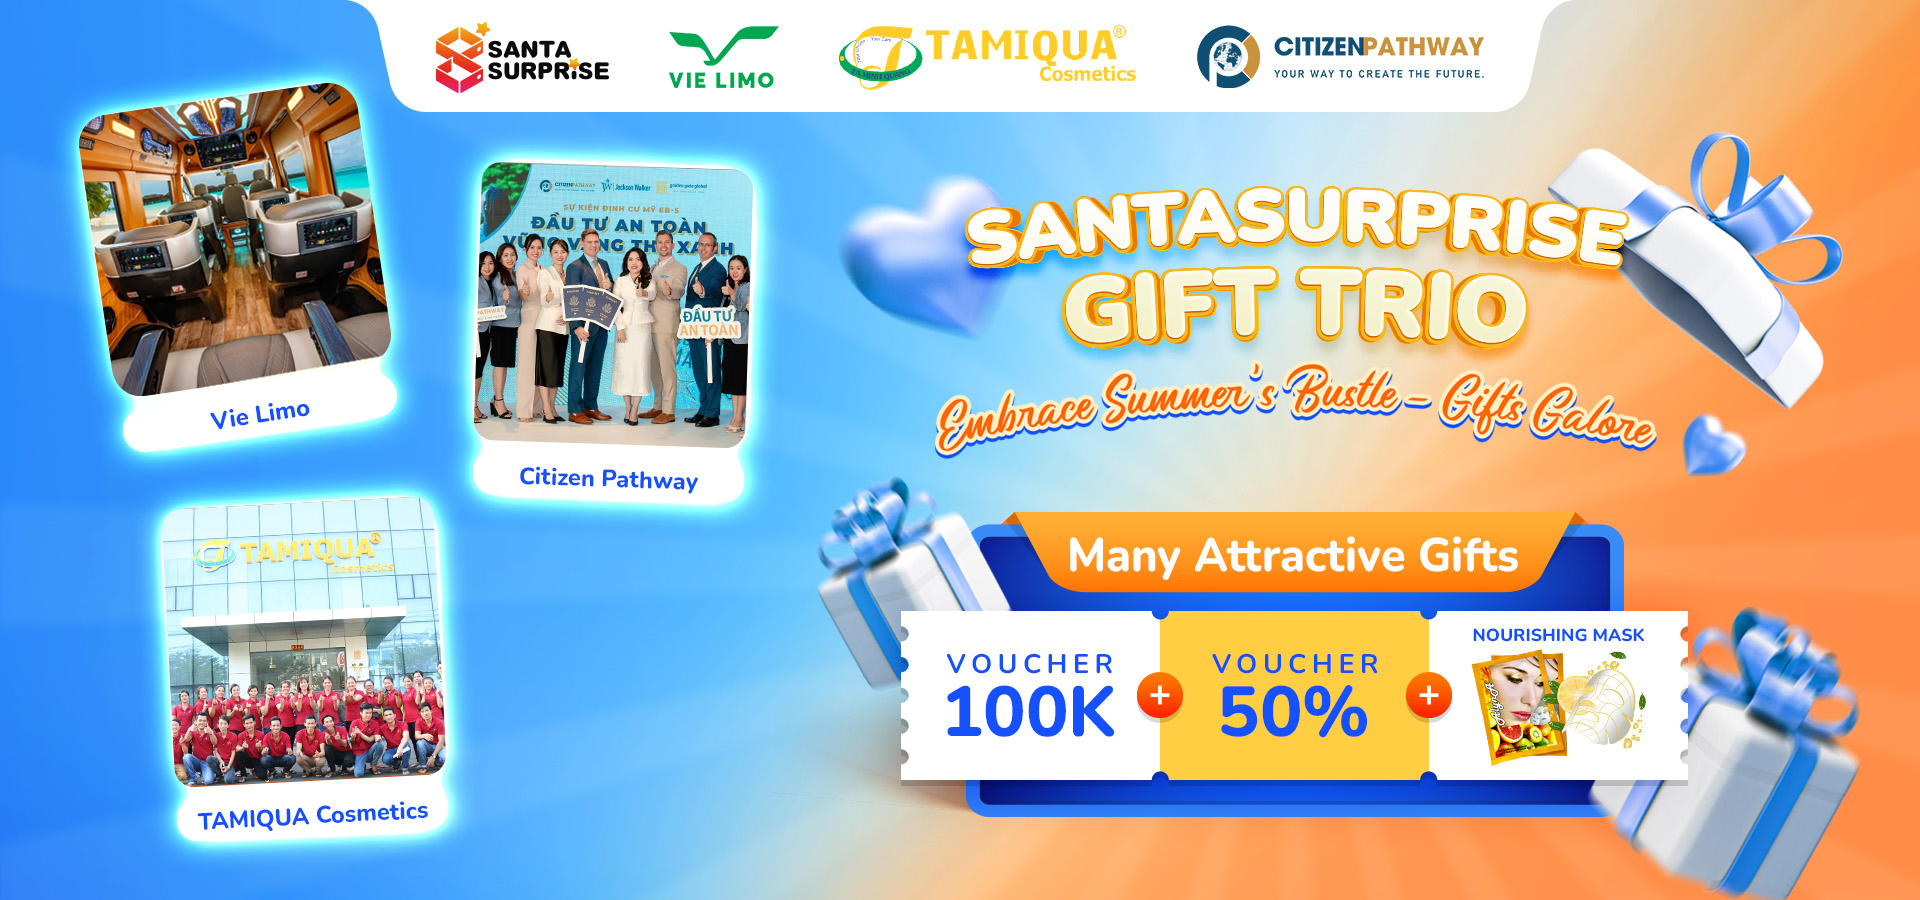 Introducing SantaSurprise Partners “Embrace Summer’s Bustle – Gifts Galore”